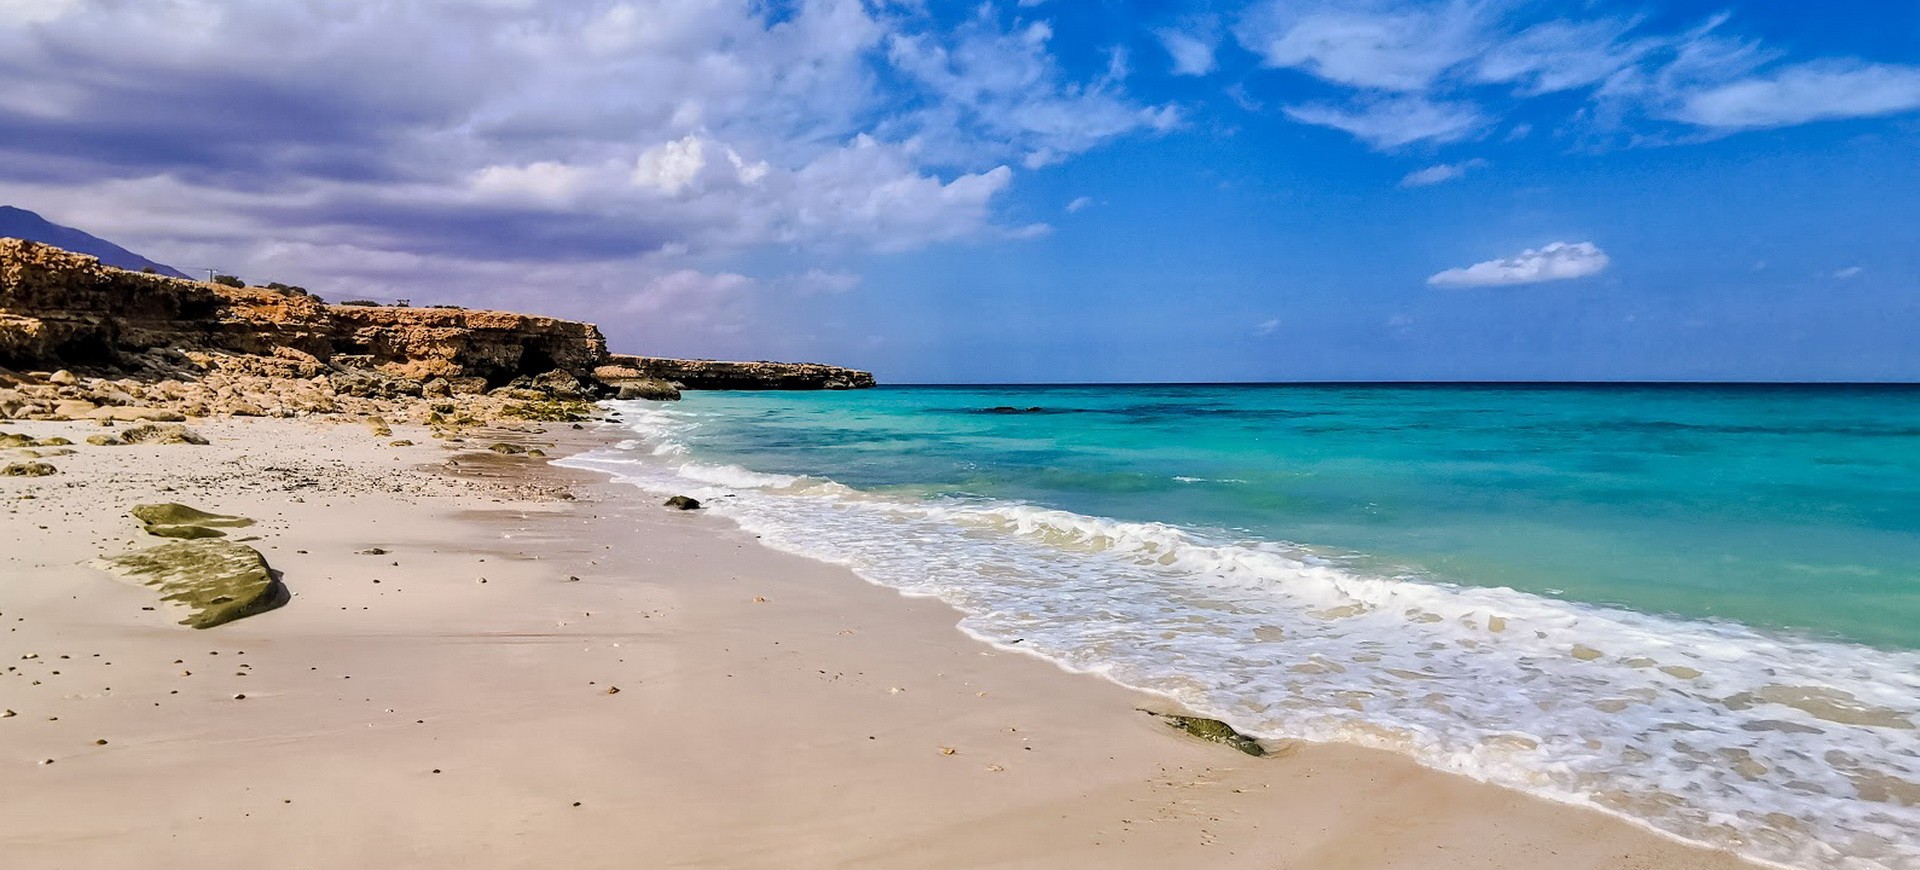 Oman Fins plage